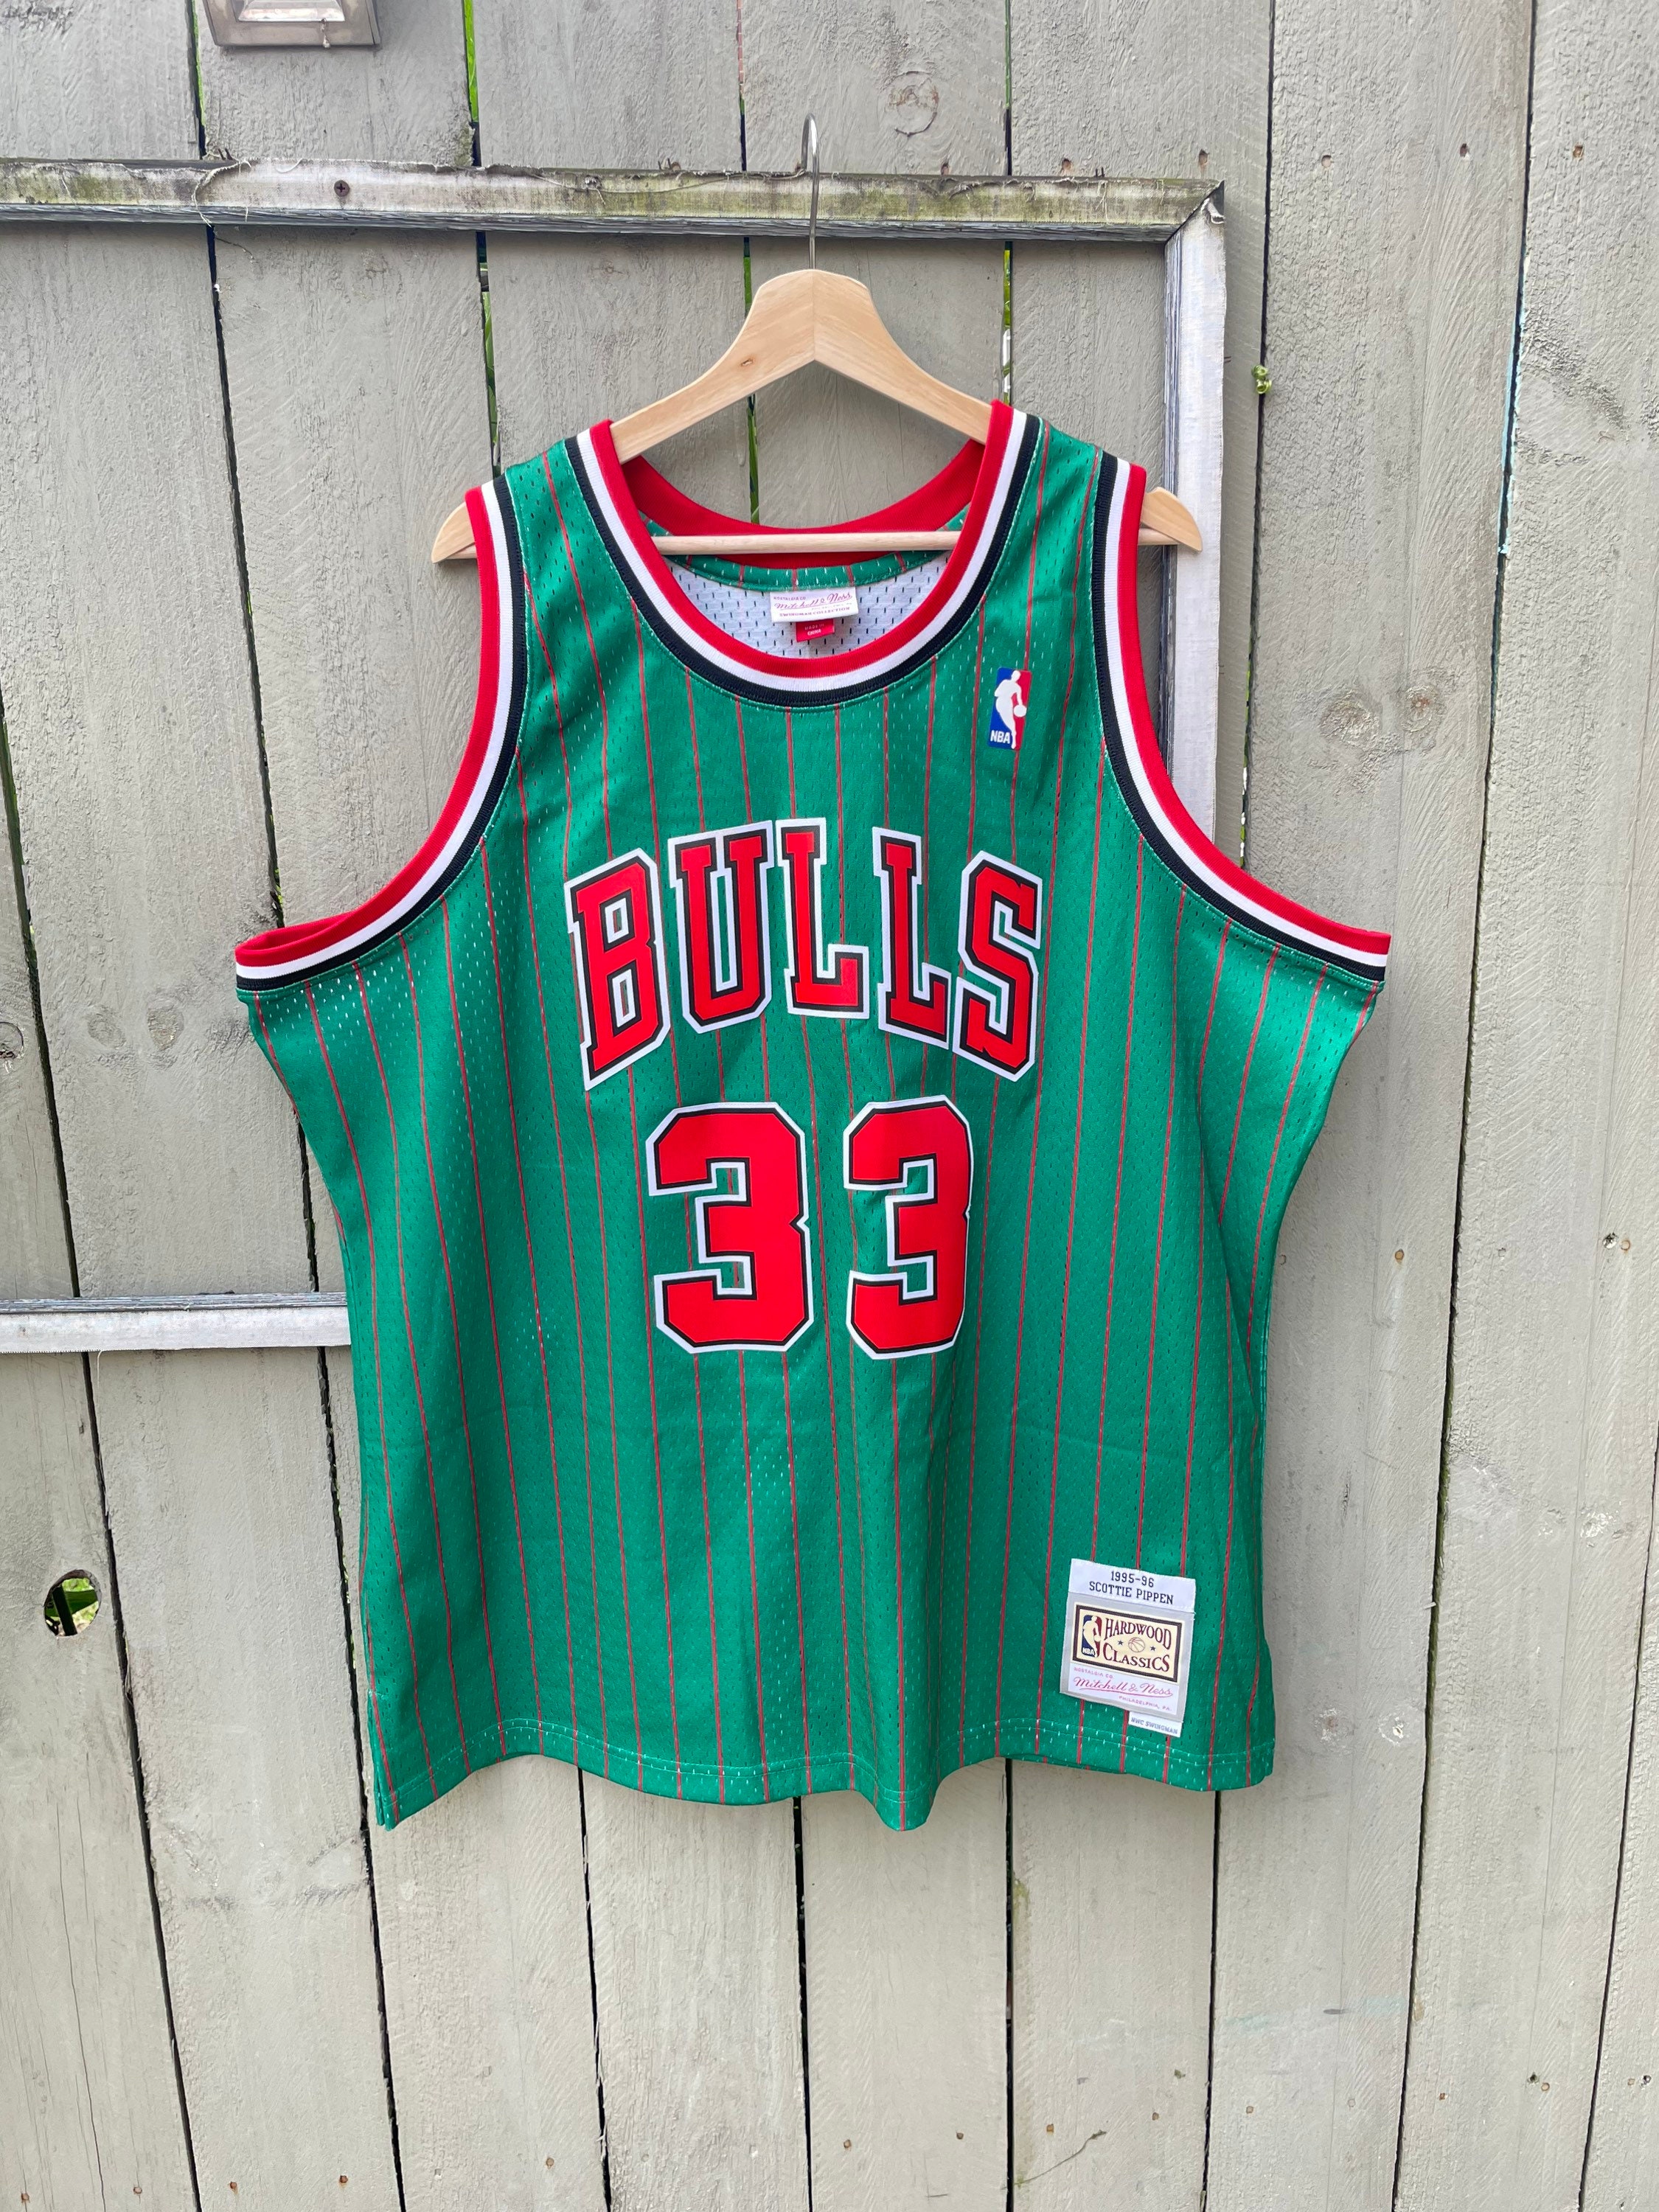 Scottie Pippen #33 Chicago Bulls NBA Champion Black Reverse Jersey Youth Xl  NEW